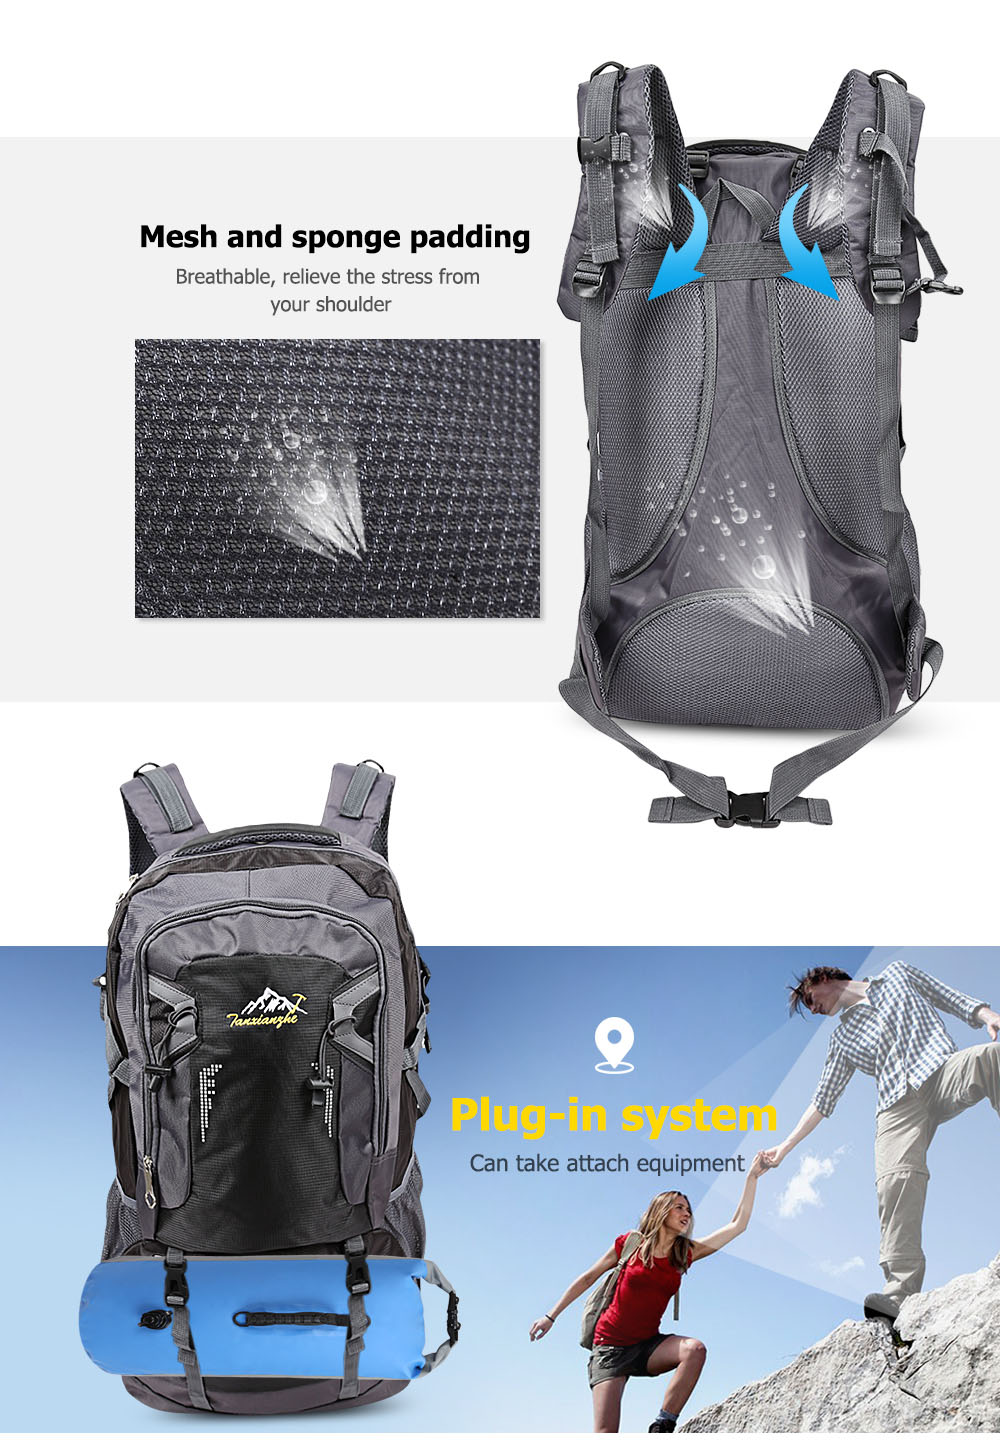 HUWAIJIANFENG 60L Lightweight Outdoor Activities Bag Travel Hiking Backpack